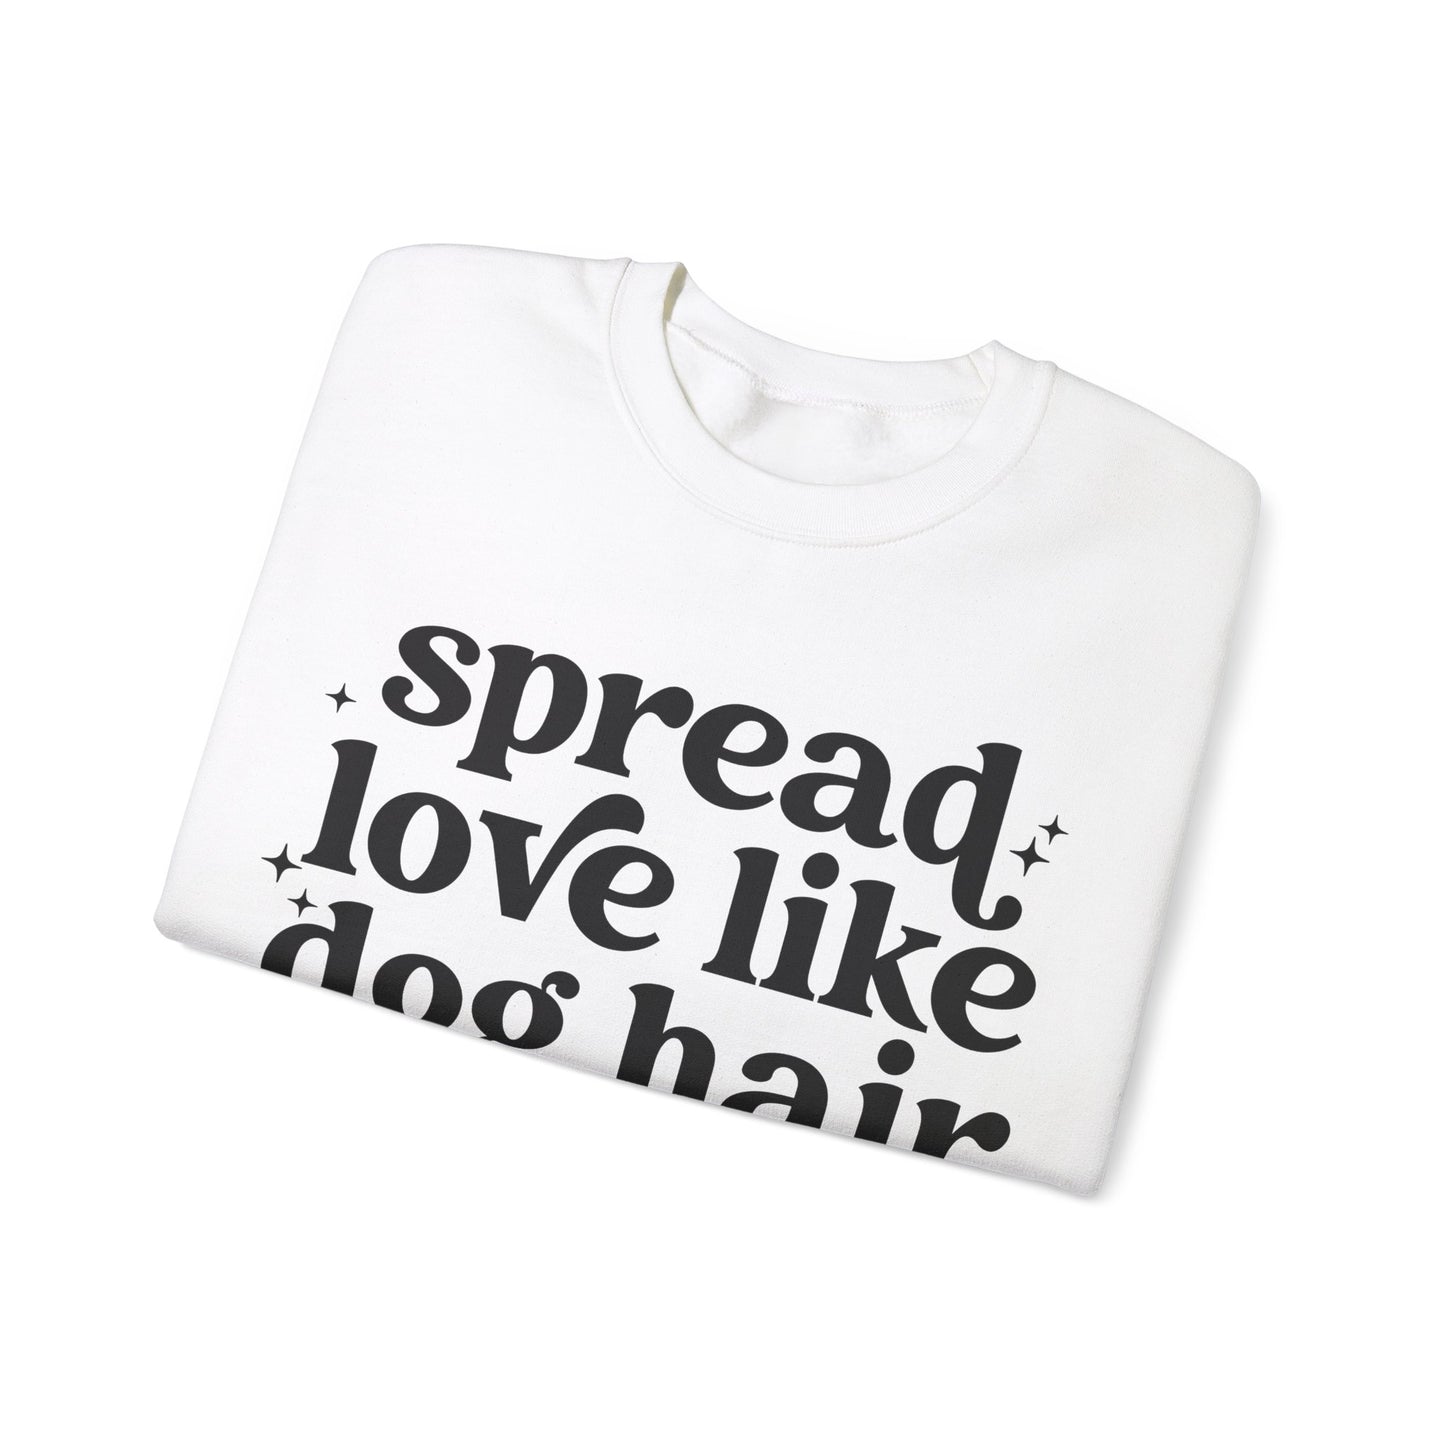 Spread Love like Dog Hair - Crewneck Sweatshirt